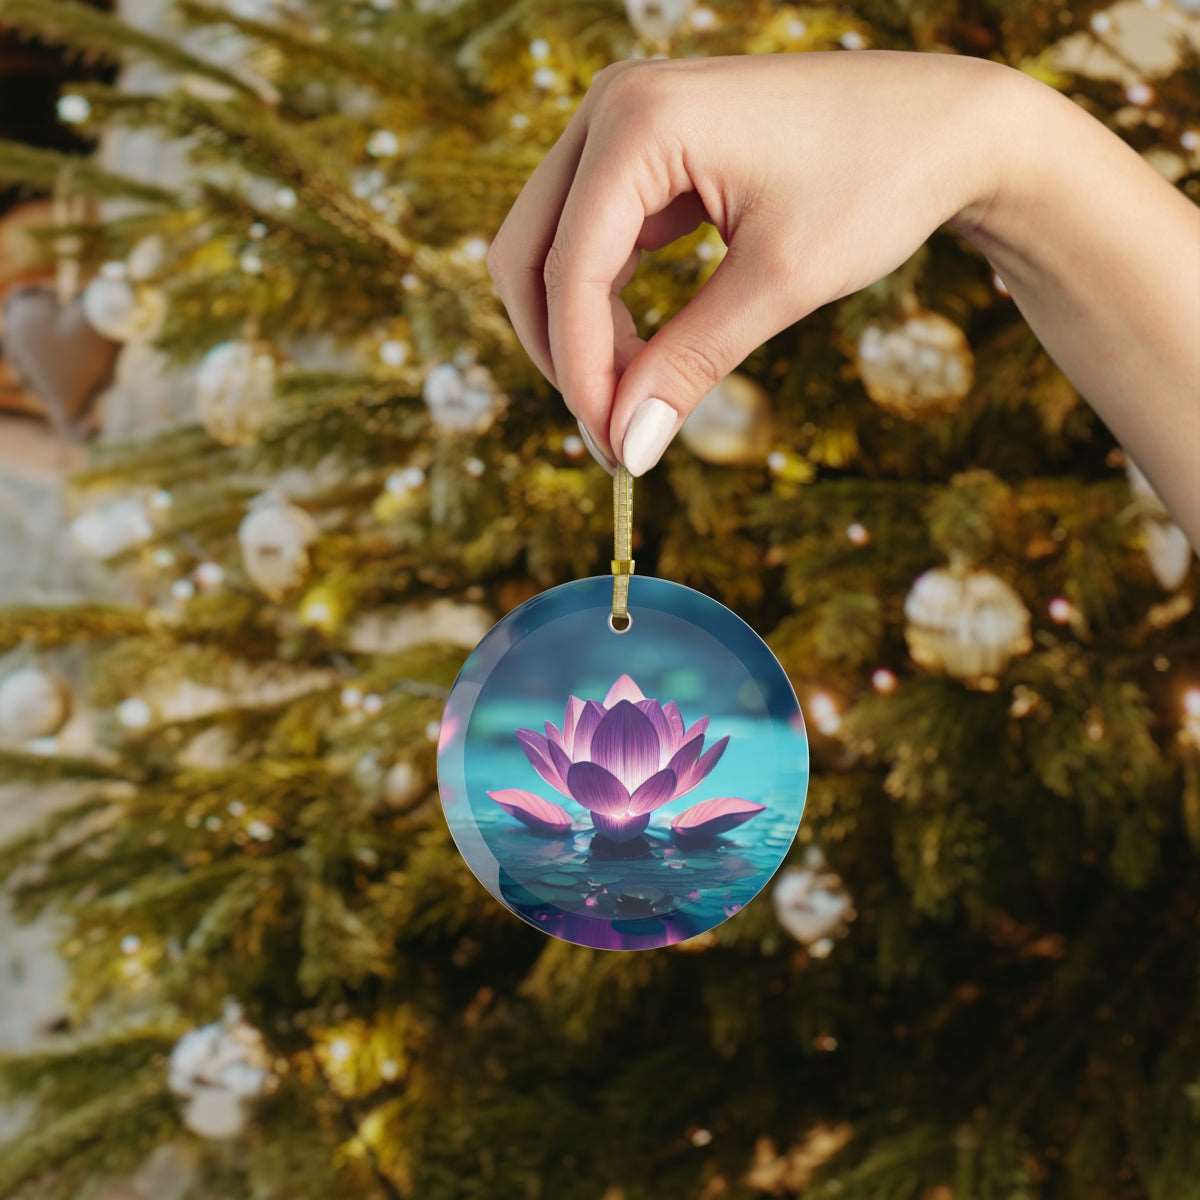 Artified Calm Lotus Glass Ornament